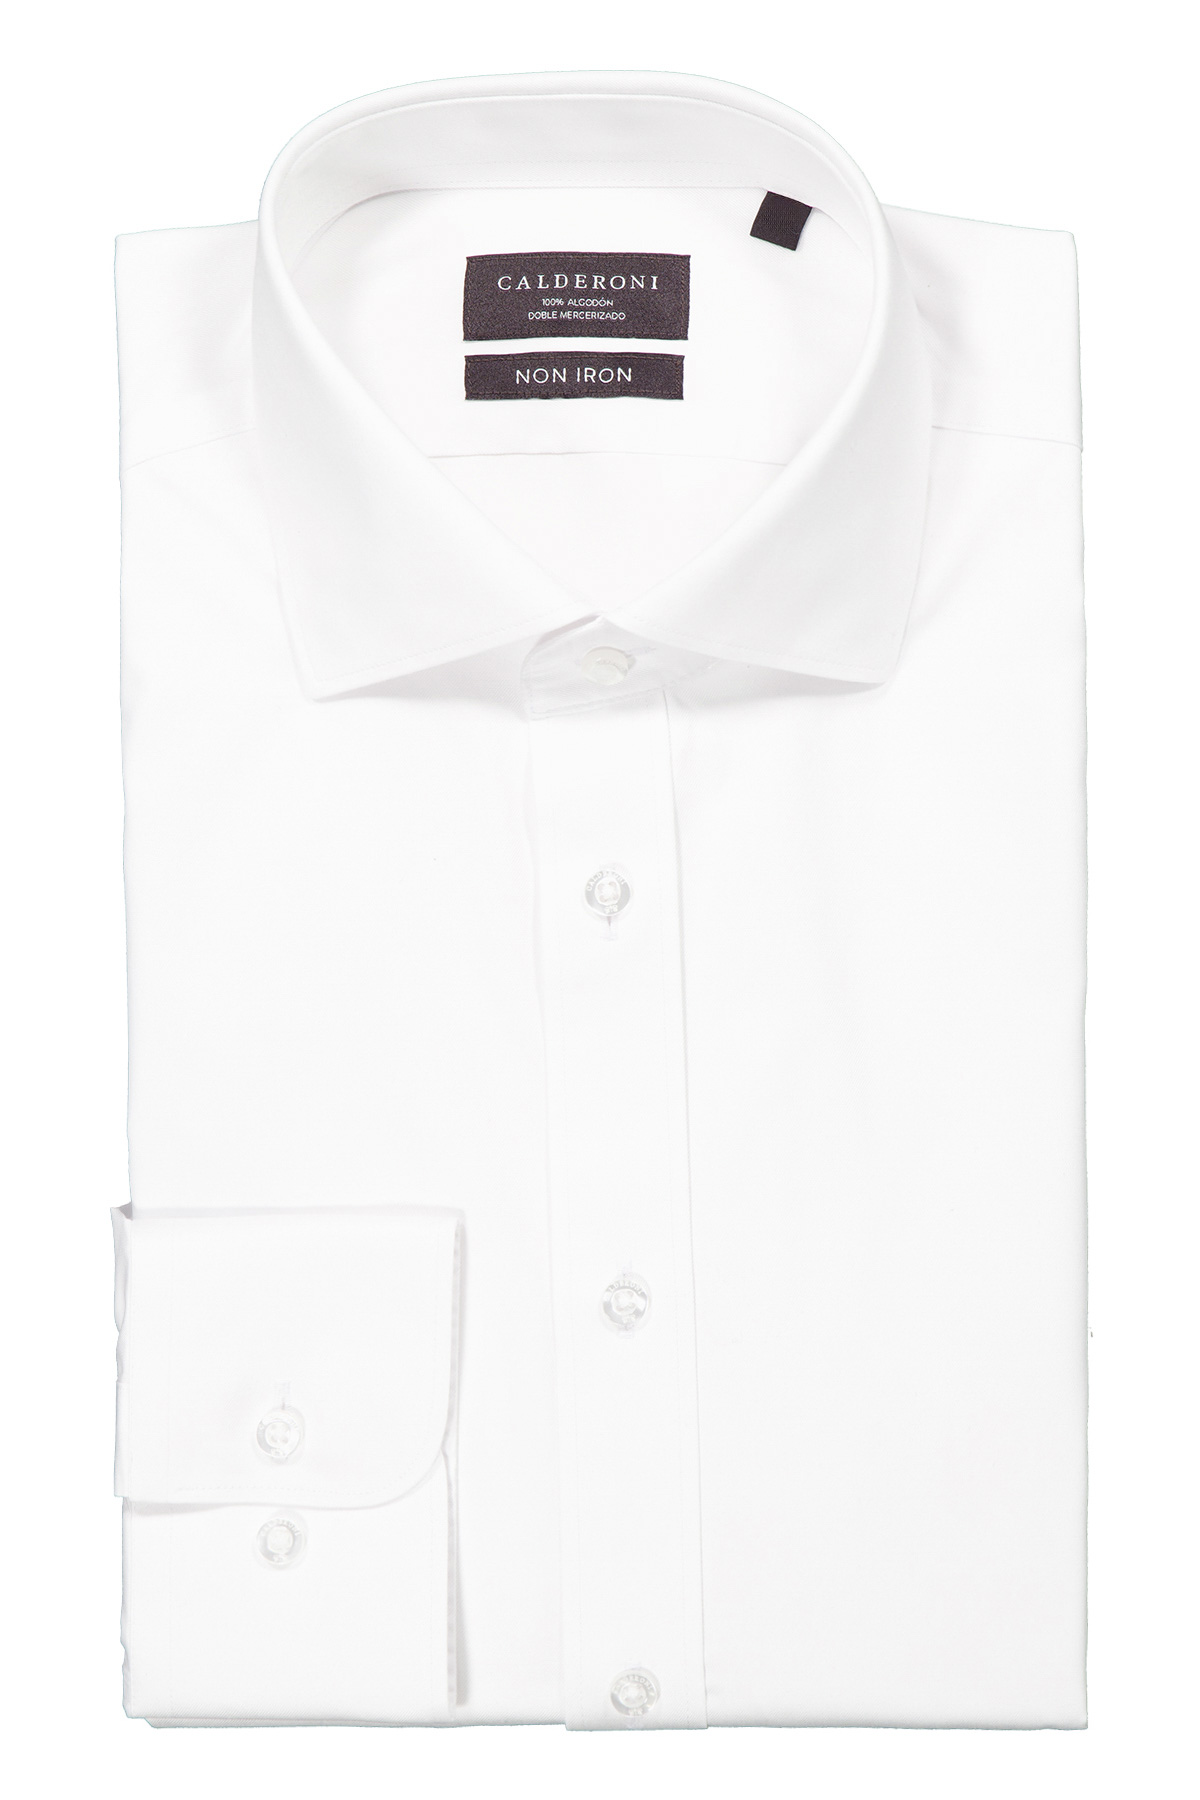 Camisa Formal NON IRON Calderoni Blanco Contemporary Fit